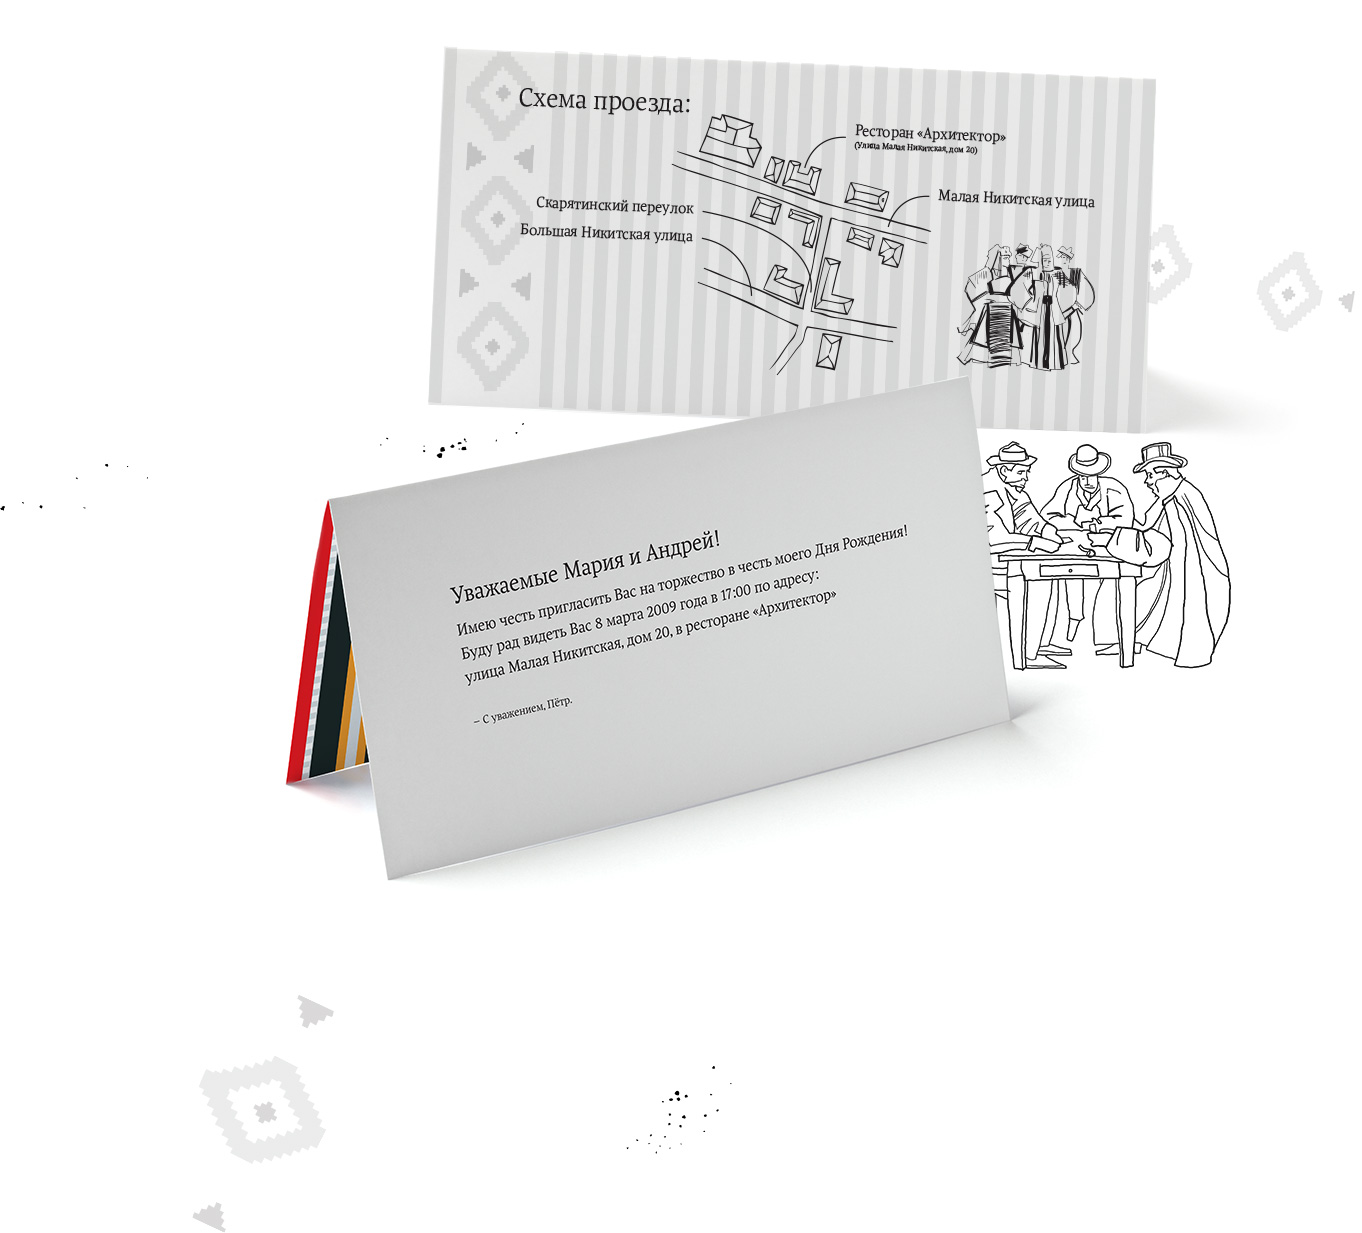 opened bulgarium invitation with the thematic illustration